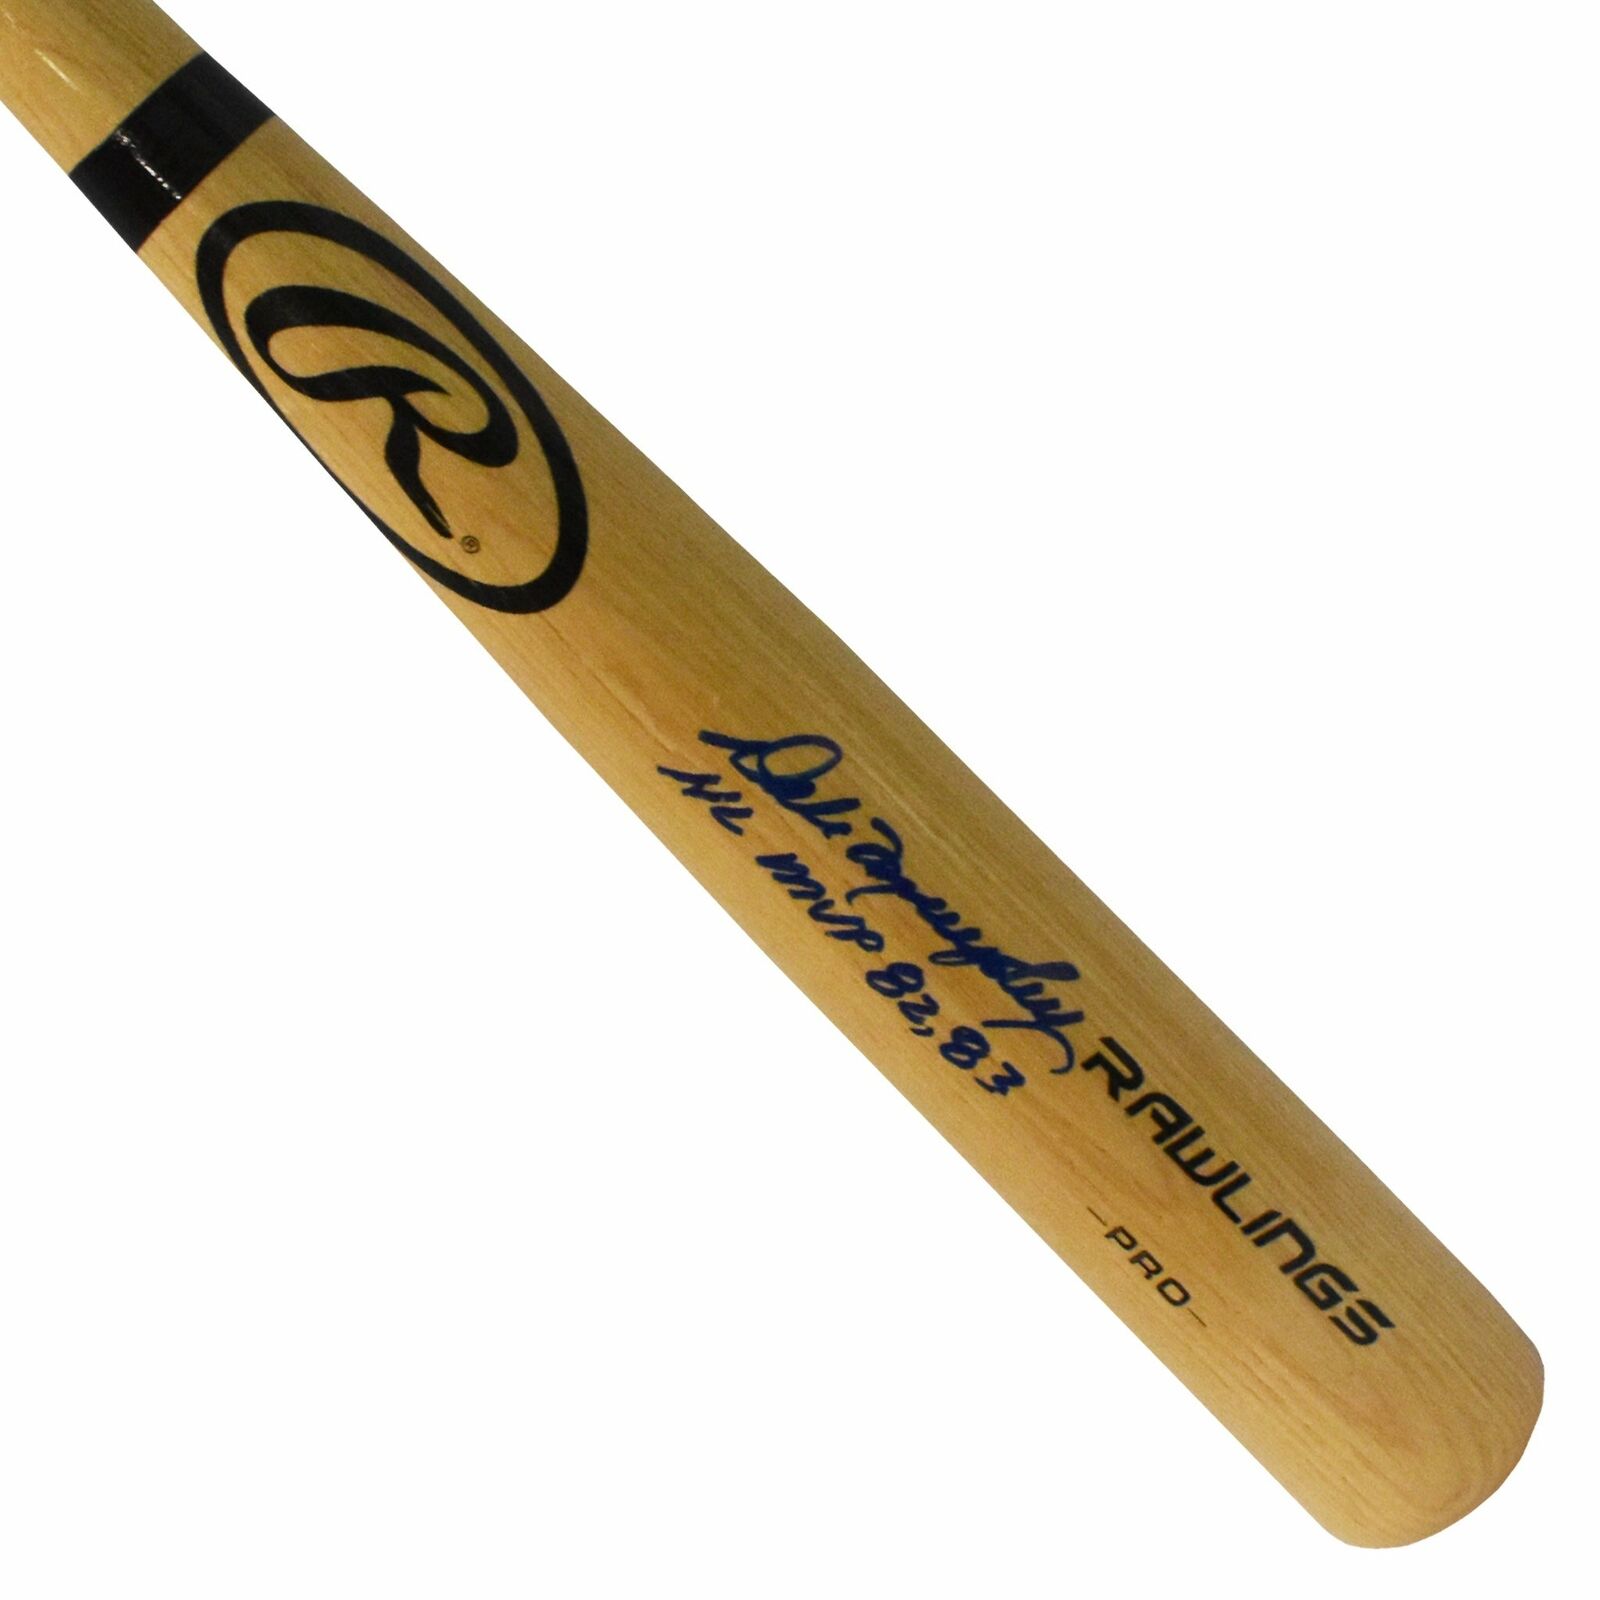 Dale Murphy Signed Inscribed 82-83 Nl Mvp Rawlings Baseball Bat Blonde (psa)